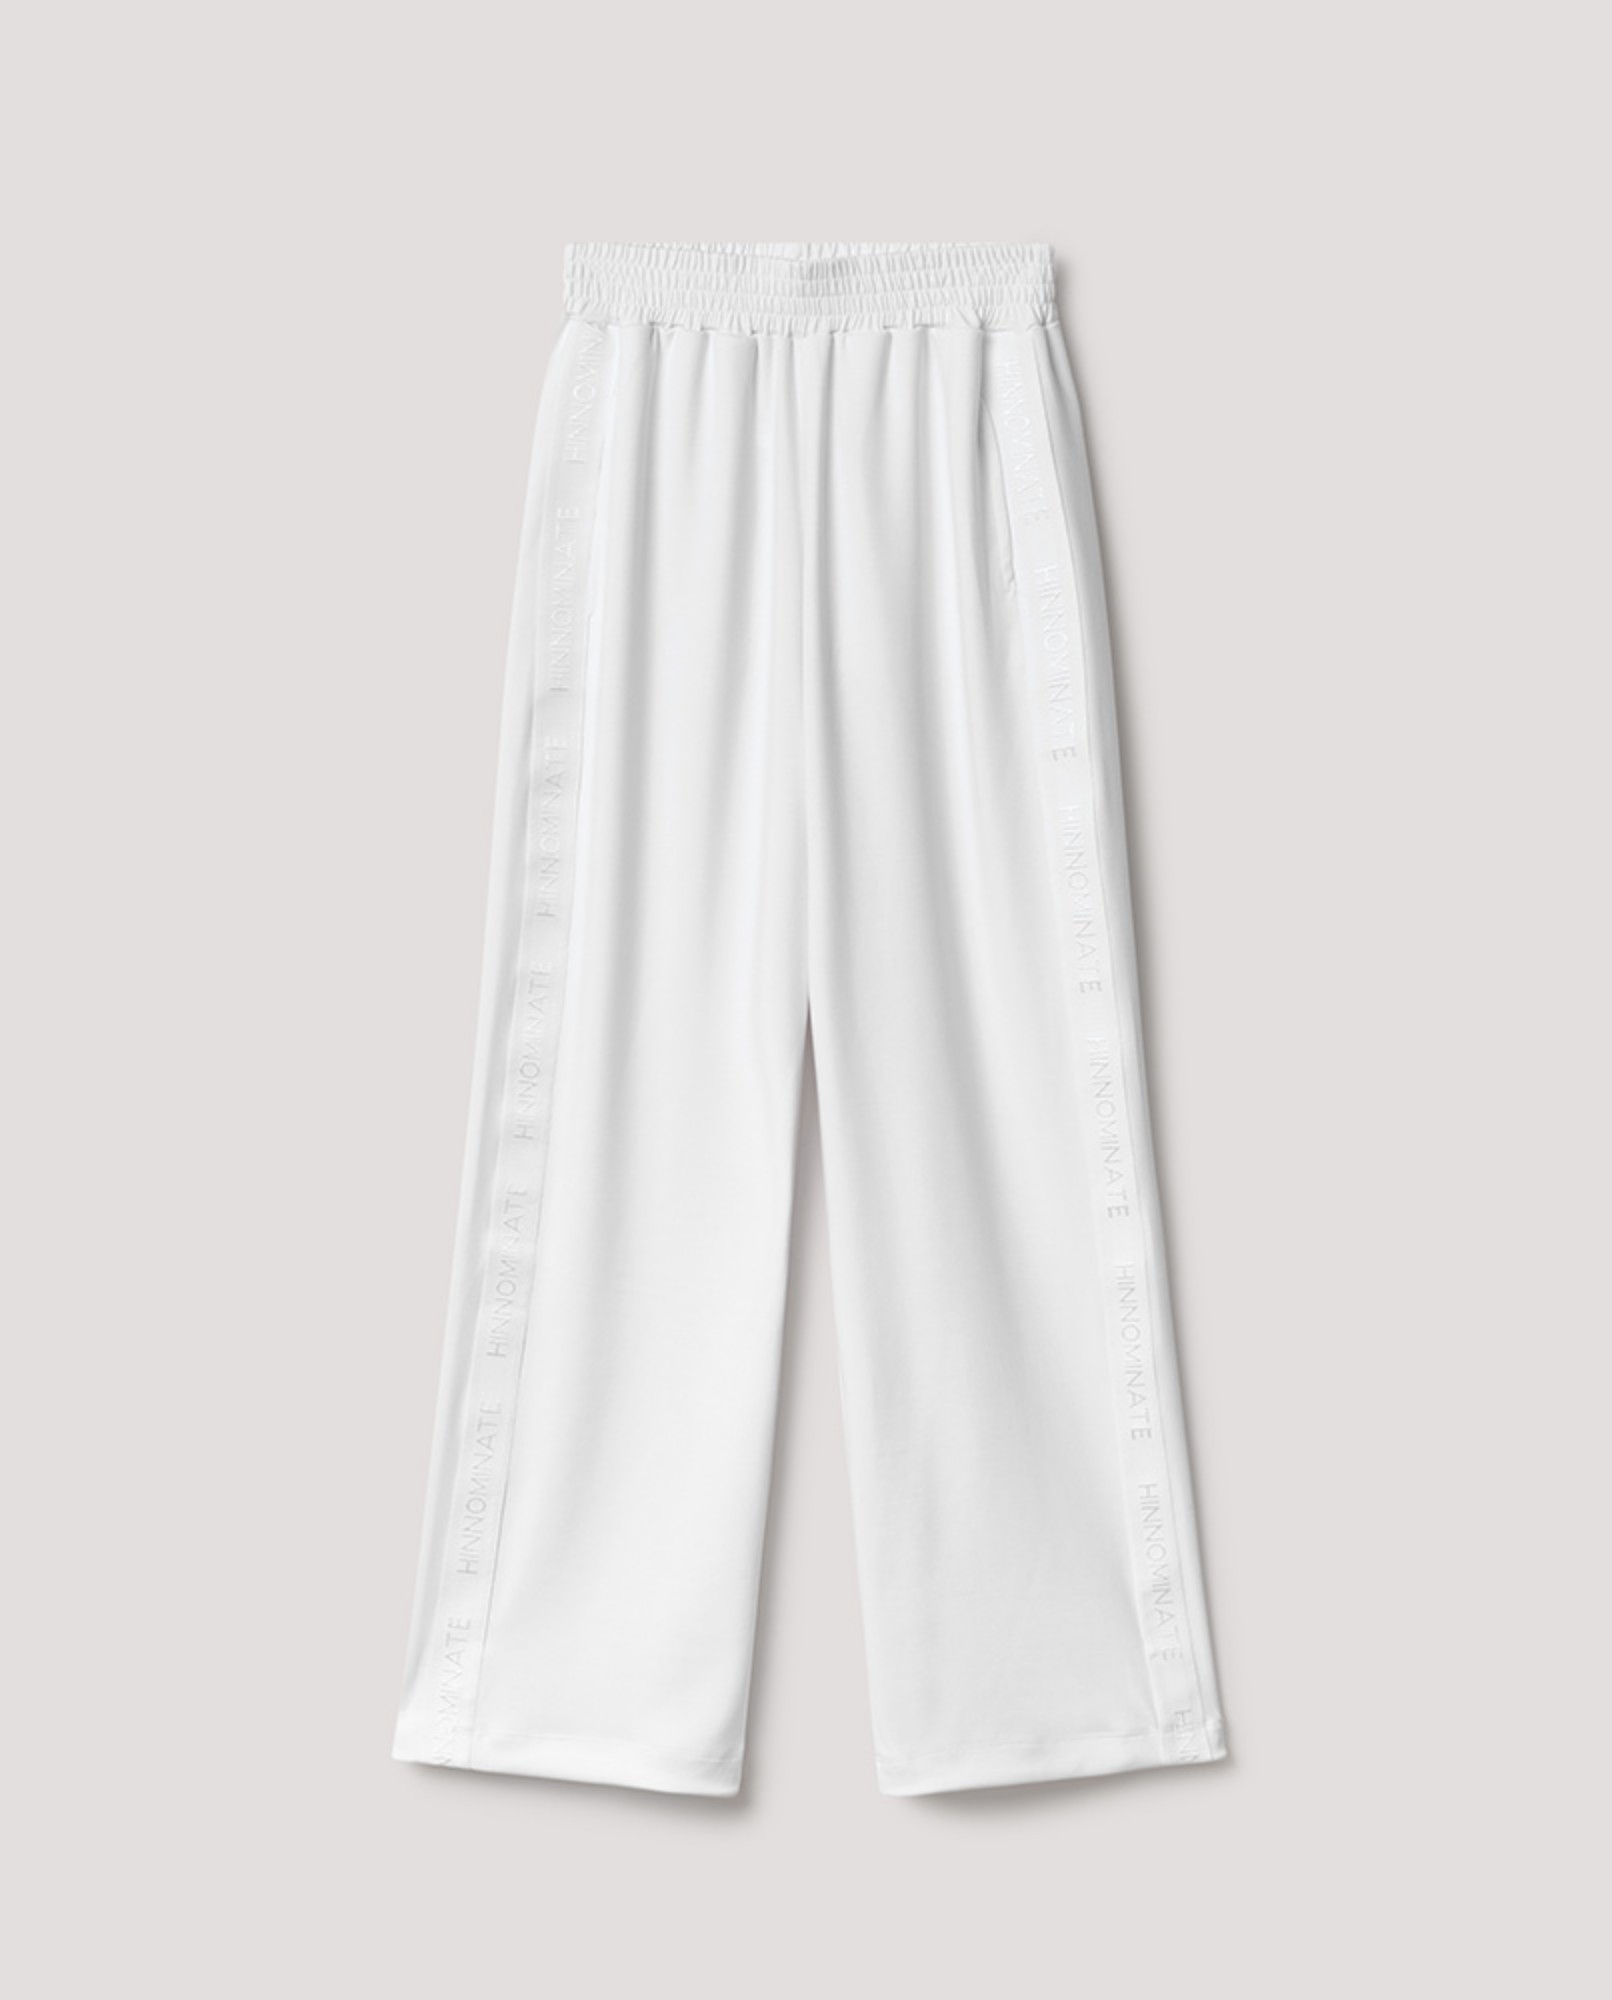 Modal Soft Touch Pantalone In Interlock Over Bianco